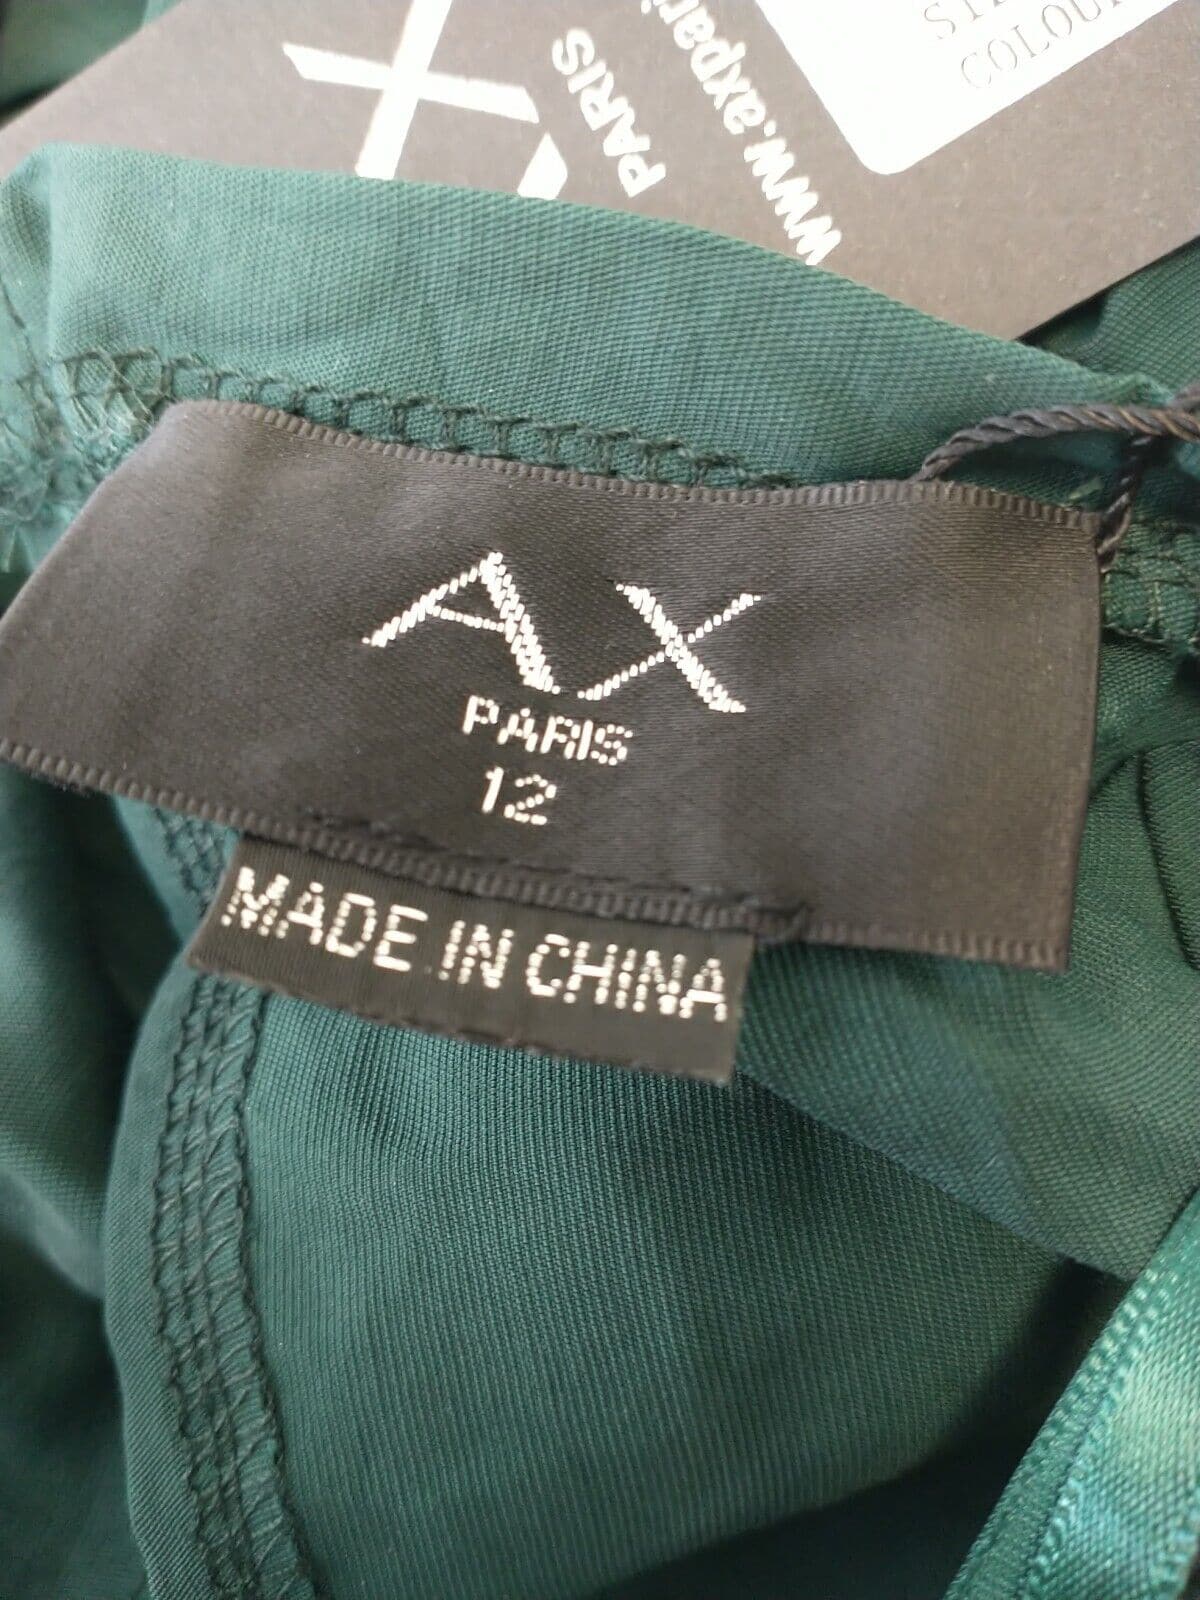 AX Paris Green High Low Midi Dress. Size UK 12 **** V39 - Big_Stock_Clearance